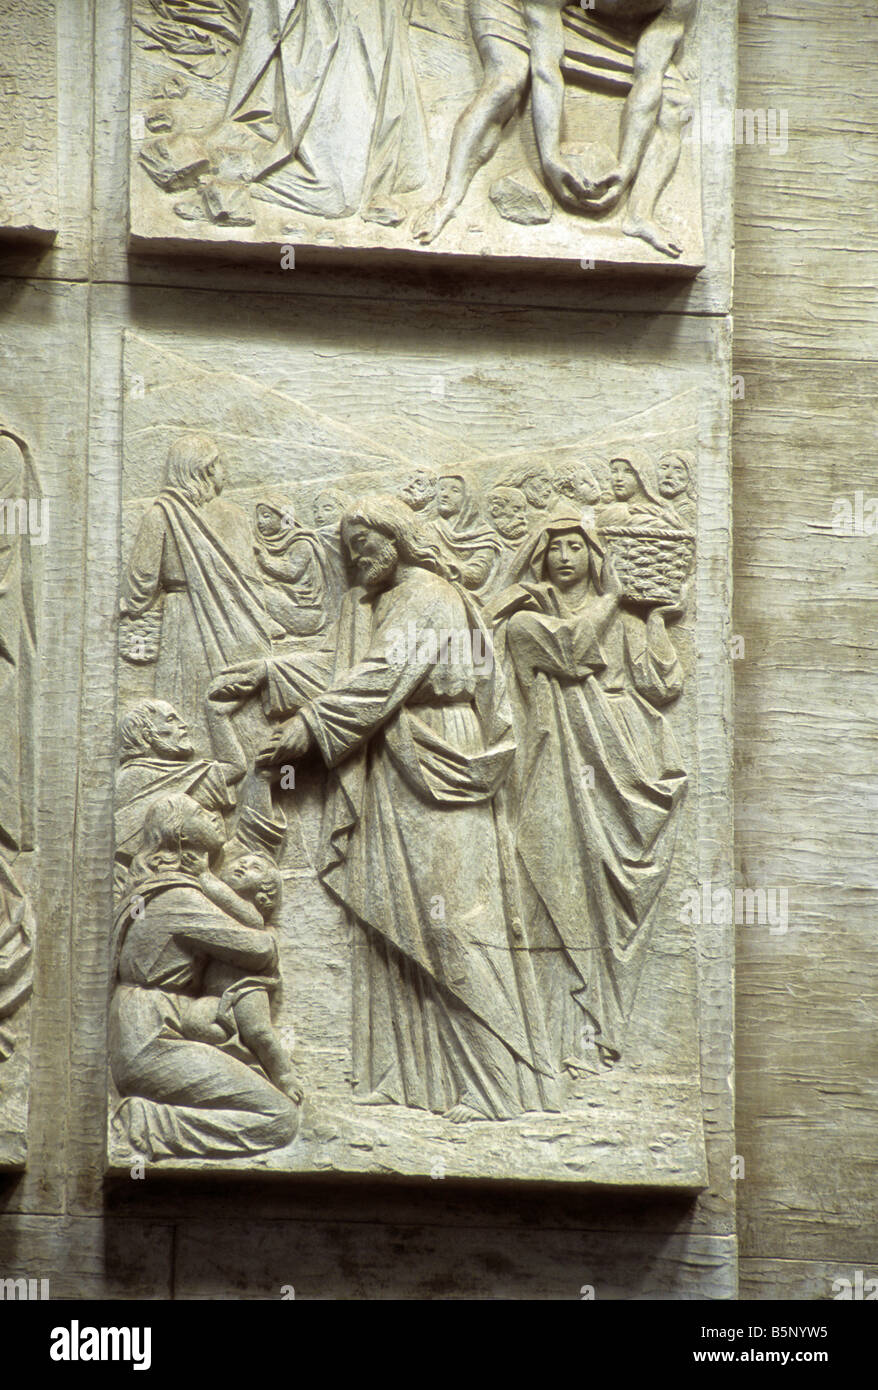 Bas relief statue of Jesus on wall at chapel of St. John's Seminary, Camarillo, California, USA Stock Photo